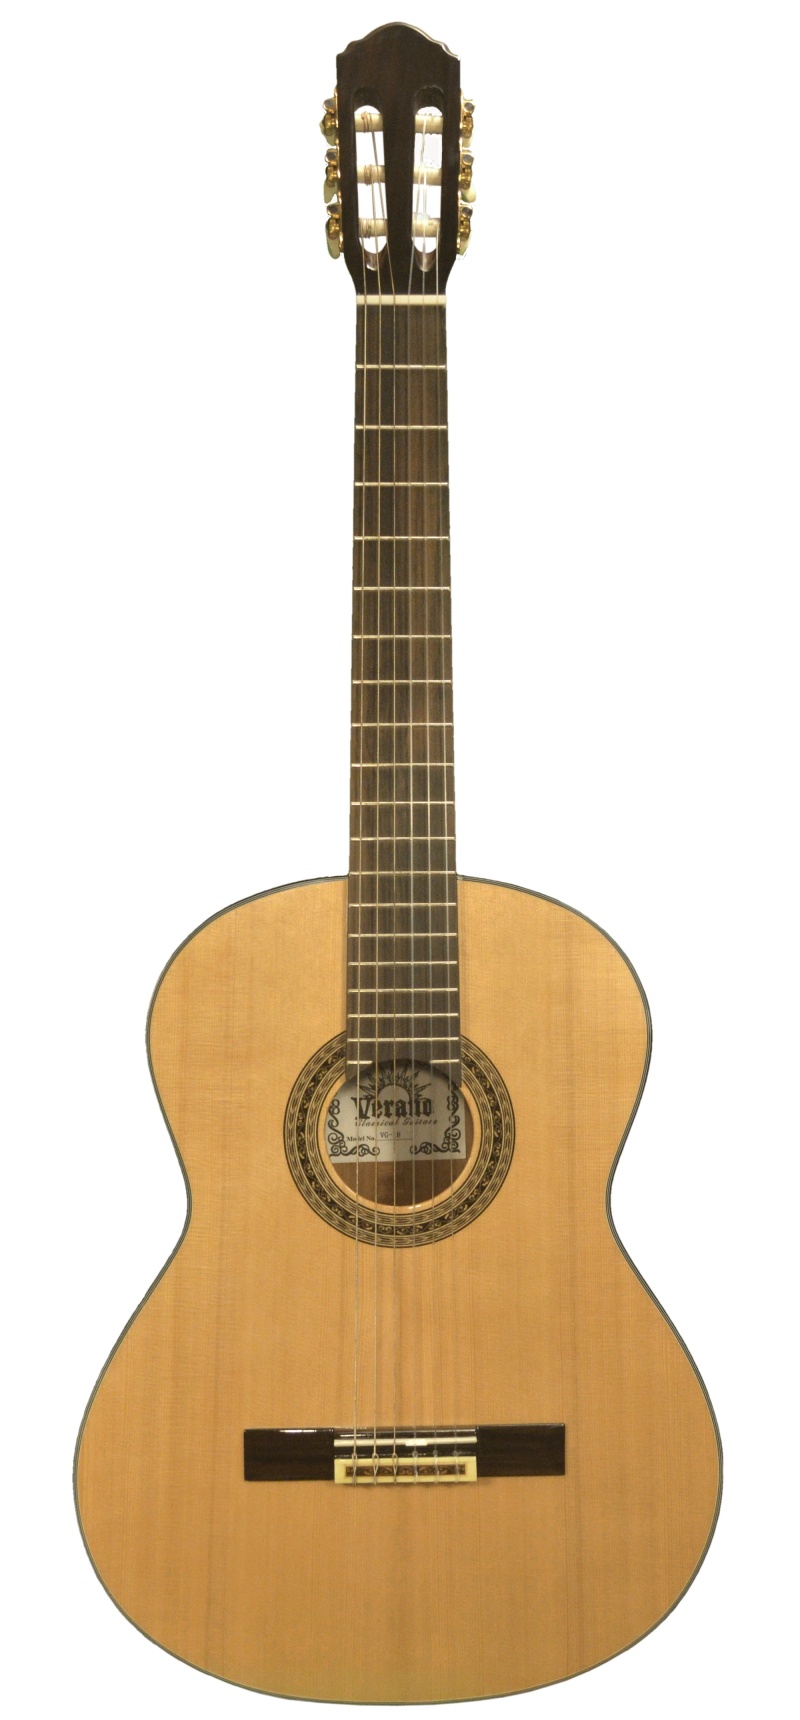 Verano Cedar Mahogany Classical Guitar